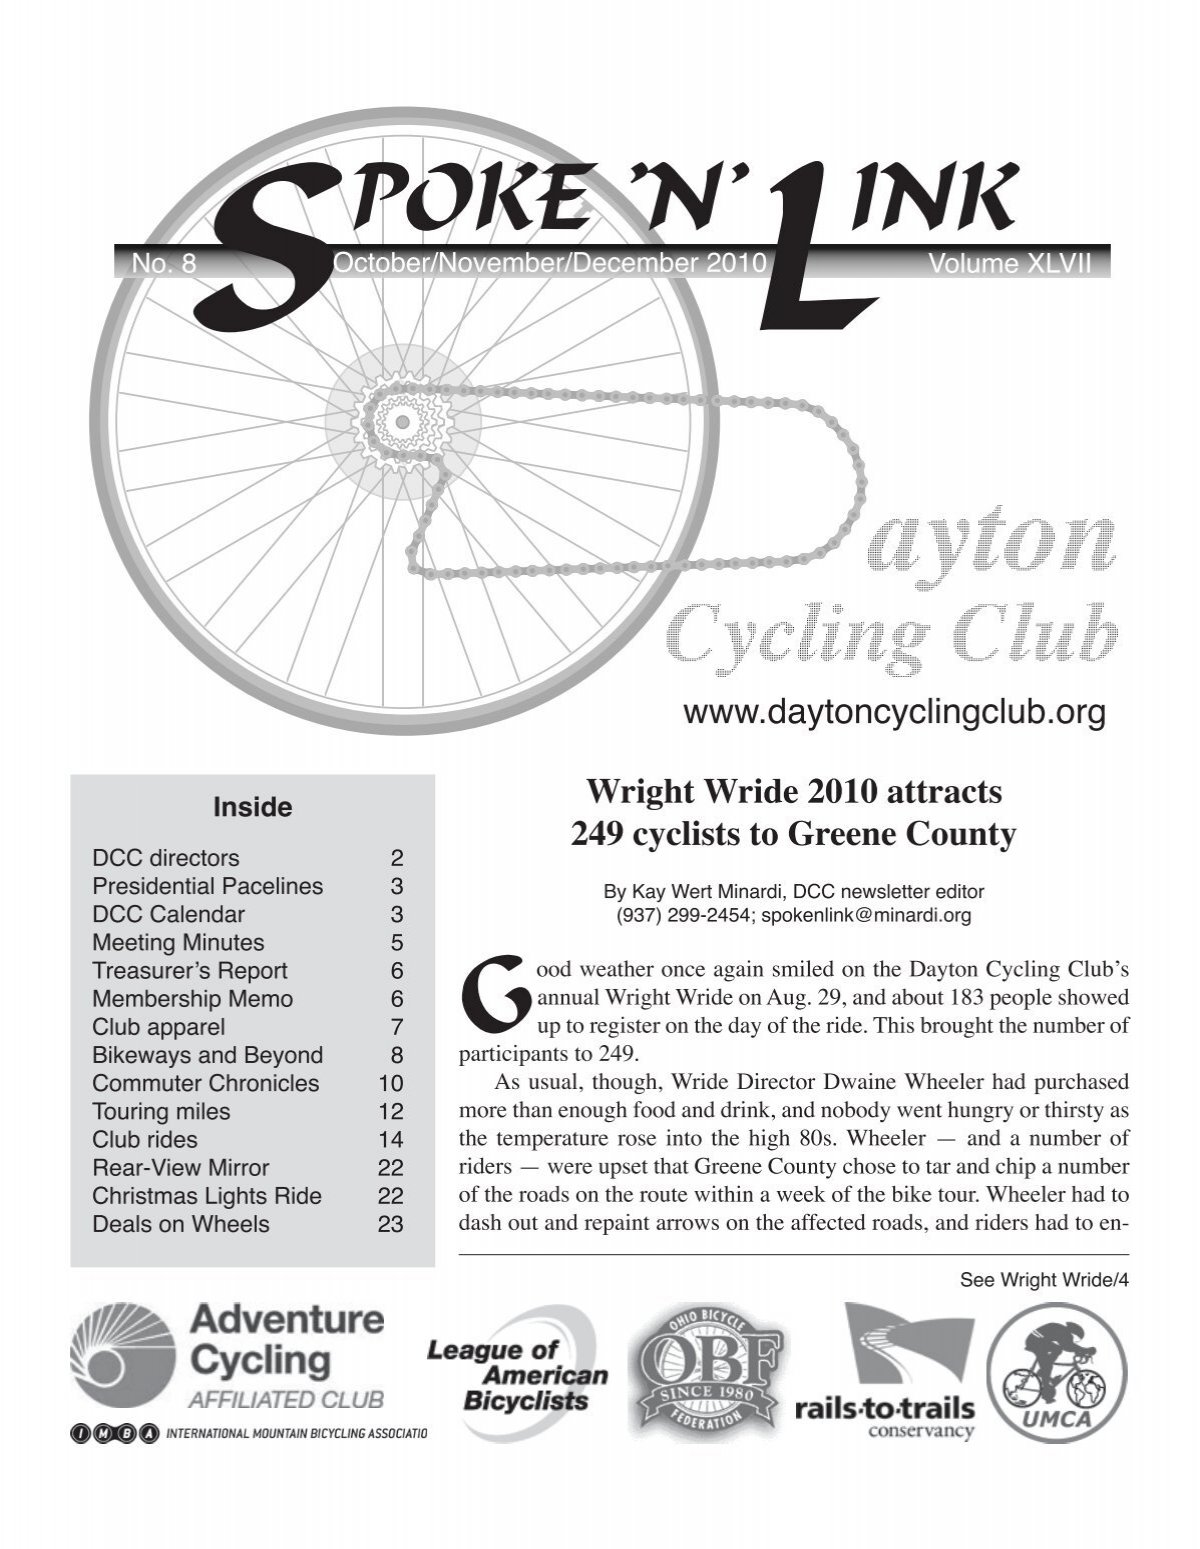 SPOKE #39 N #39 LINK Dayton Cycling Club